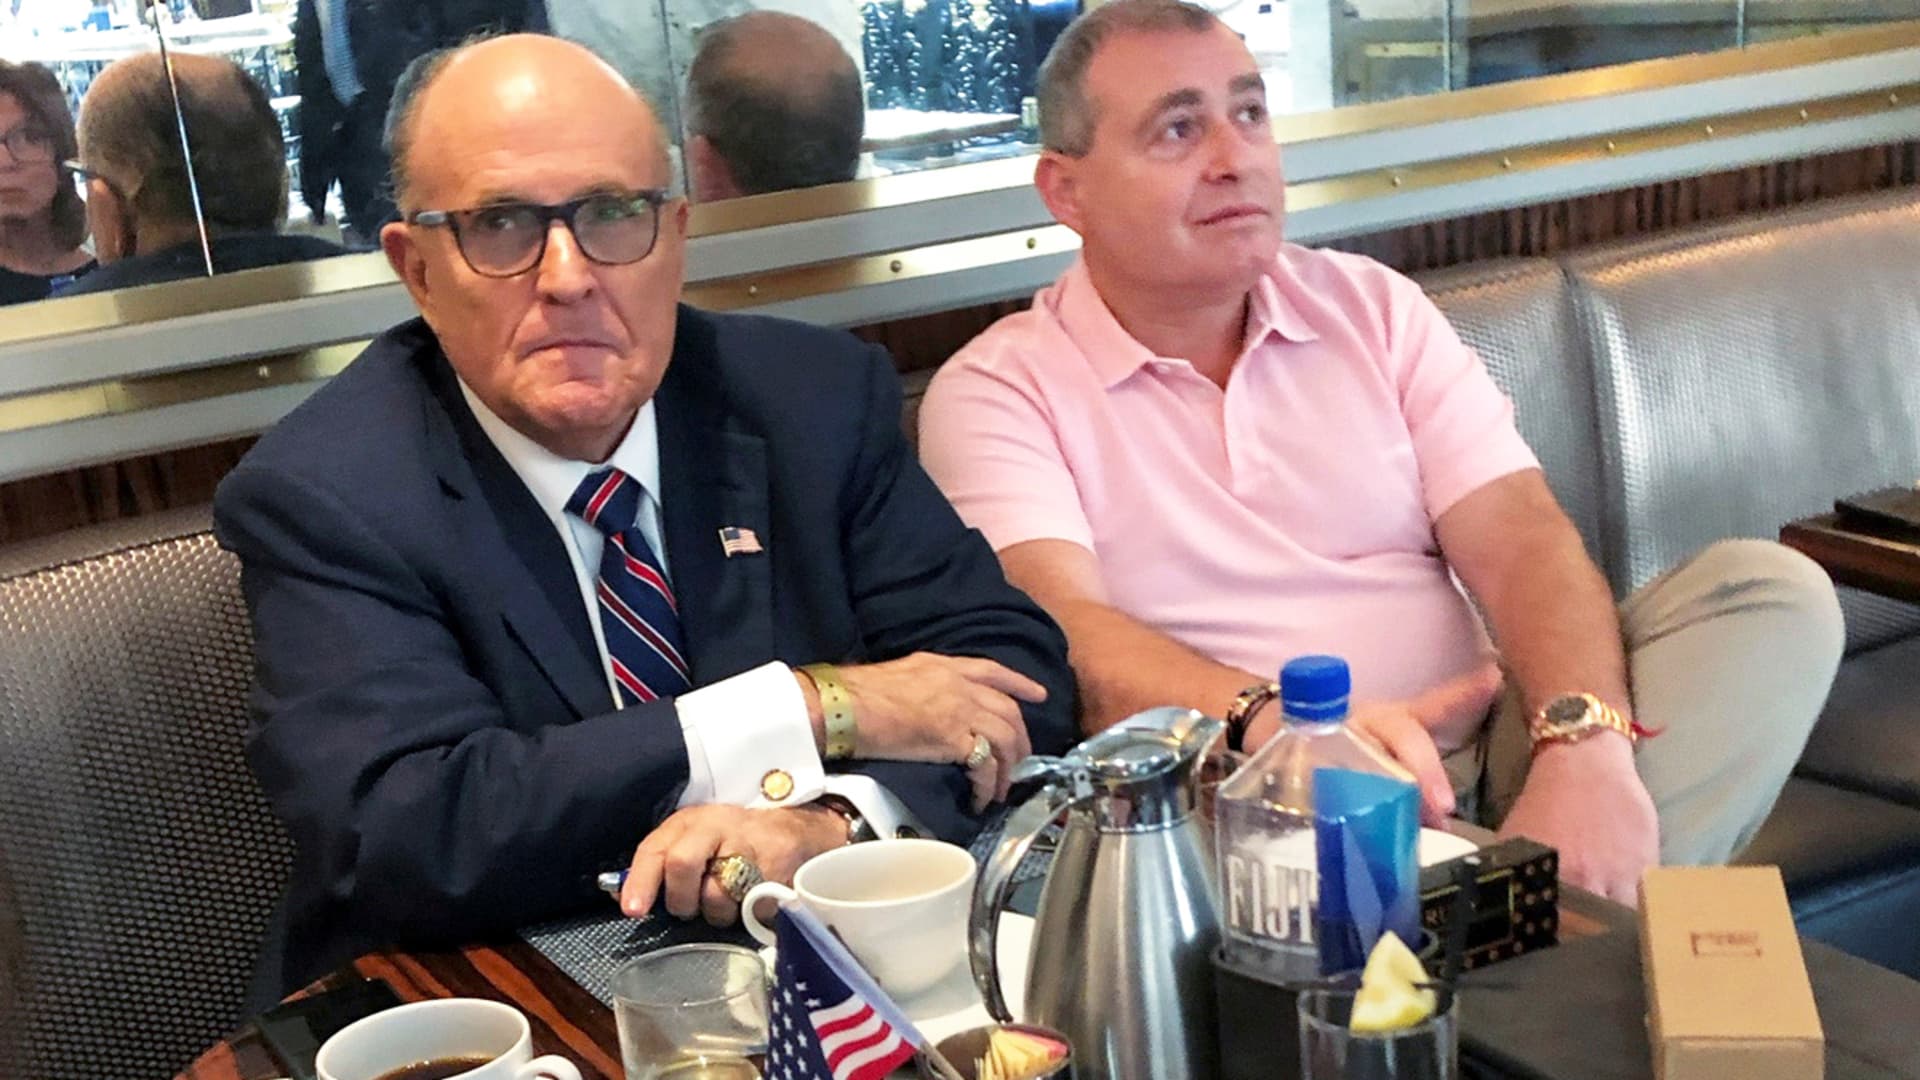 President Trump's personal lawyer Rudy Giuliani has coffee with Ukrainian-American businessman Lev Parnas at the Trump International Hotel in Washington, September 20, 2019.